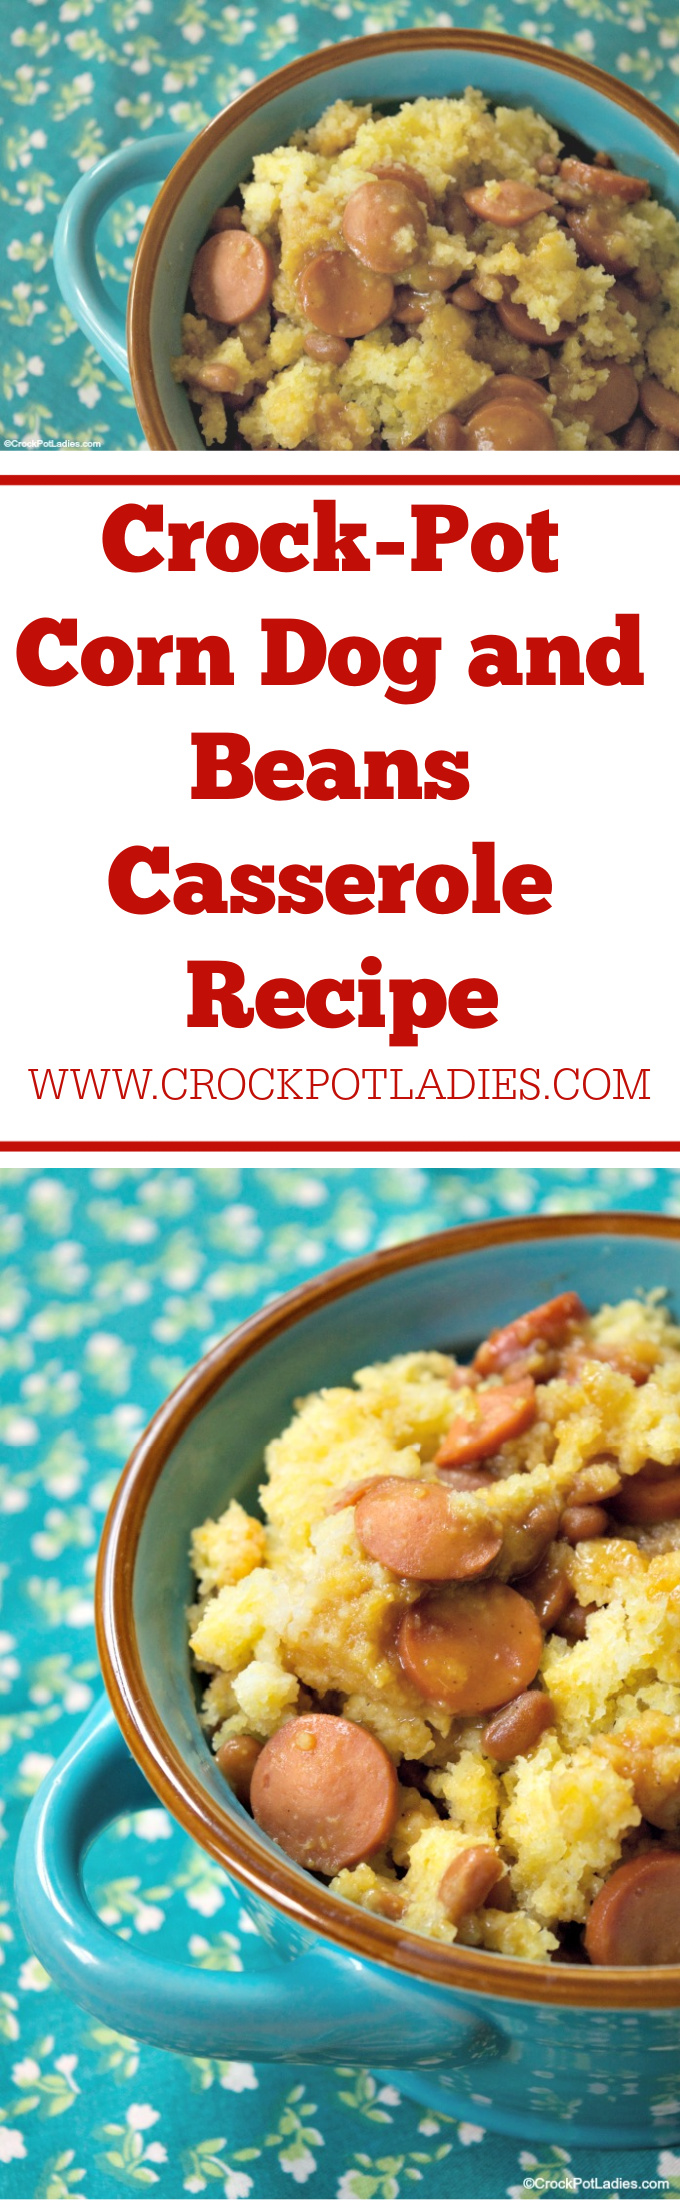 Crock-Pot Corn Dog and Beans Casserole Recipe